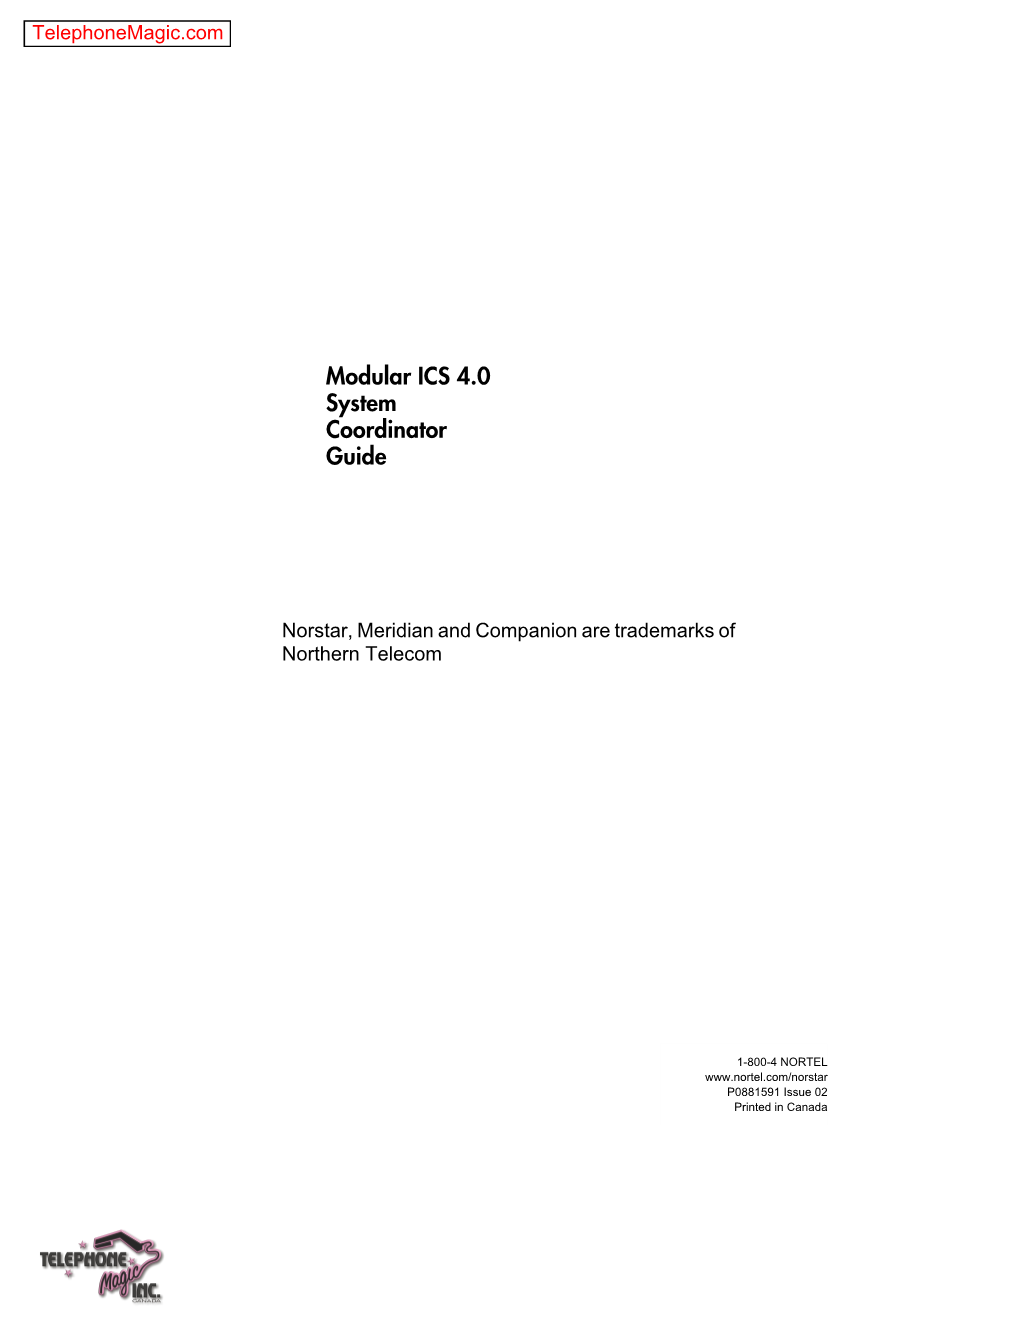 Modular ICS 4.0 System Coordinator Guide